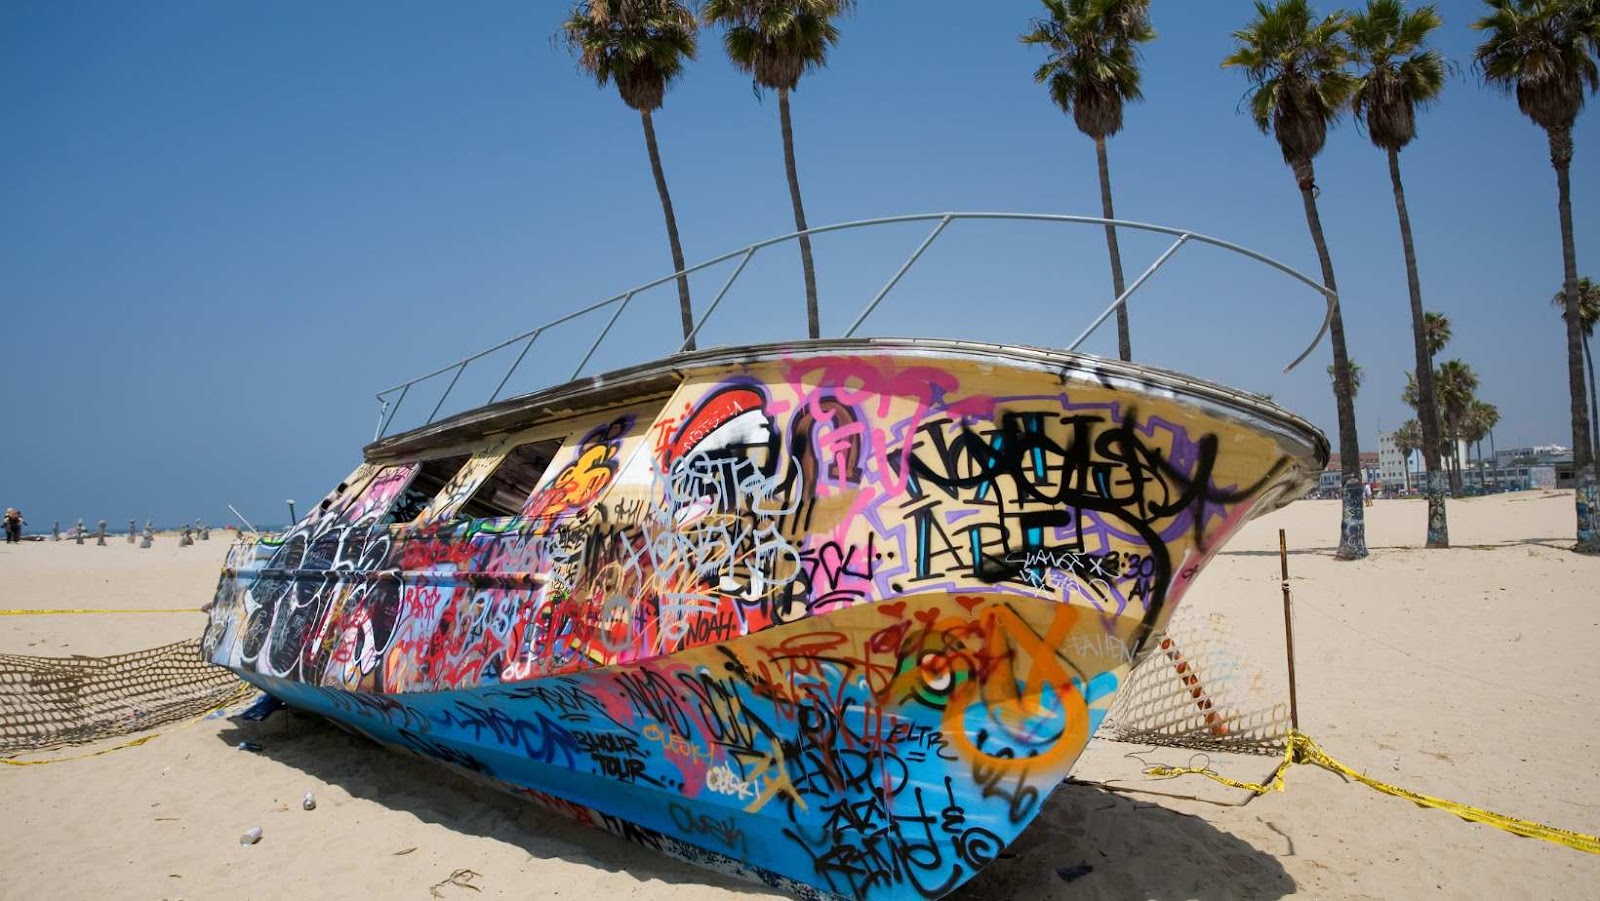 Graffiti Arts and Murals in Venice Beach - Stay Open